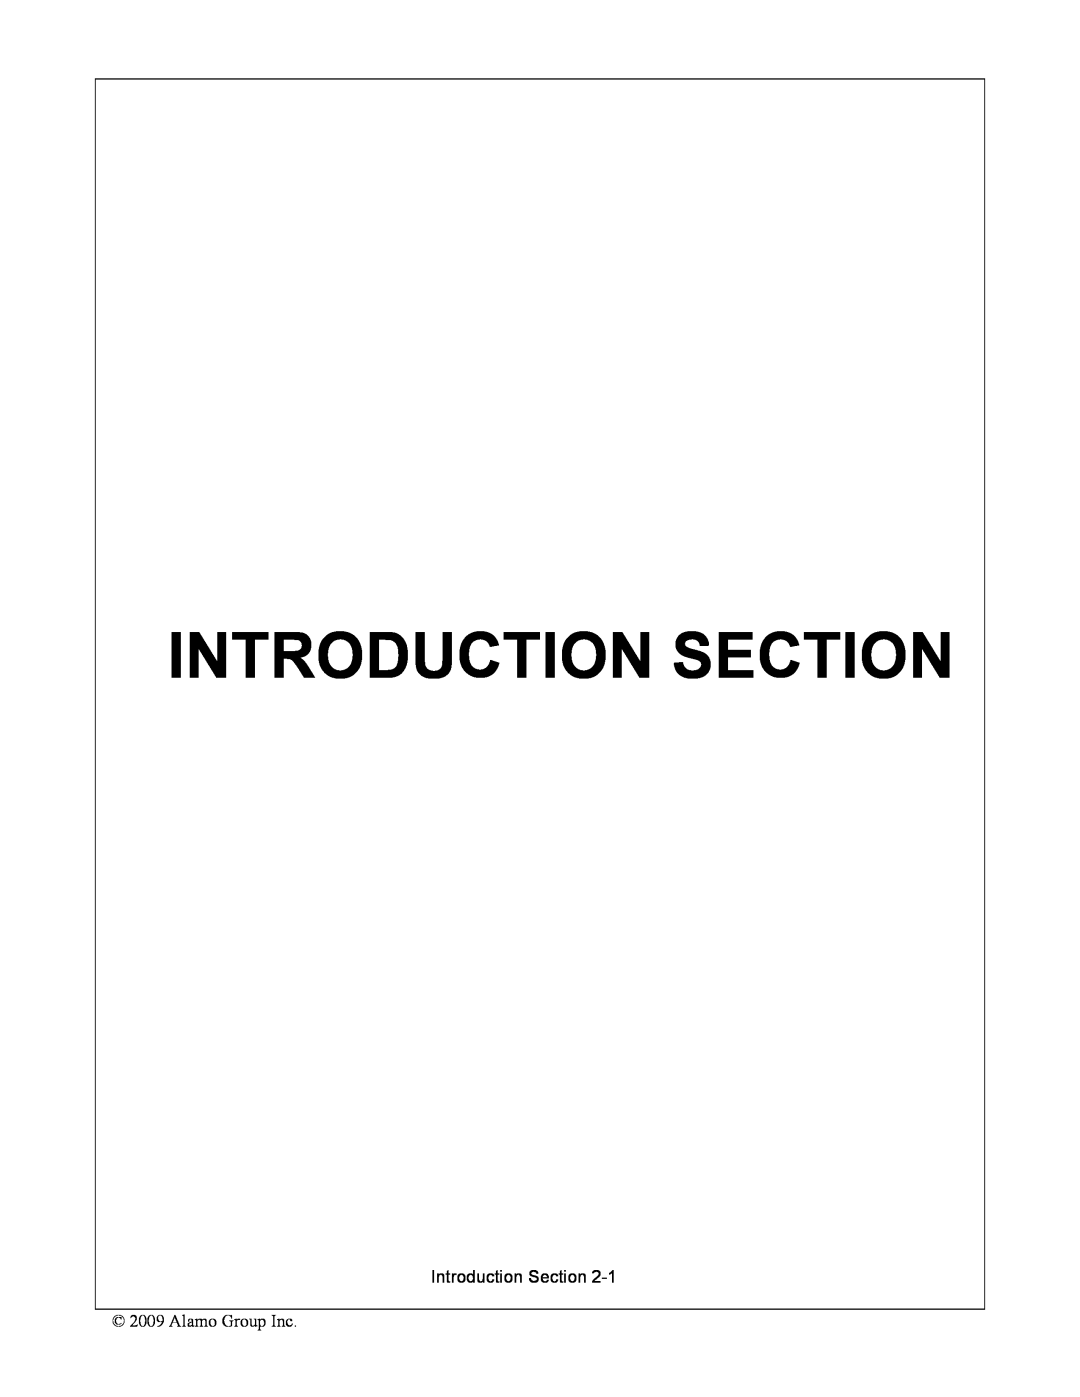 Alamo SX15 manual Introduction Section 